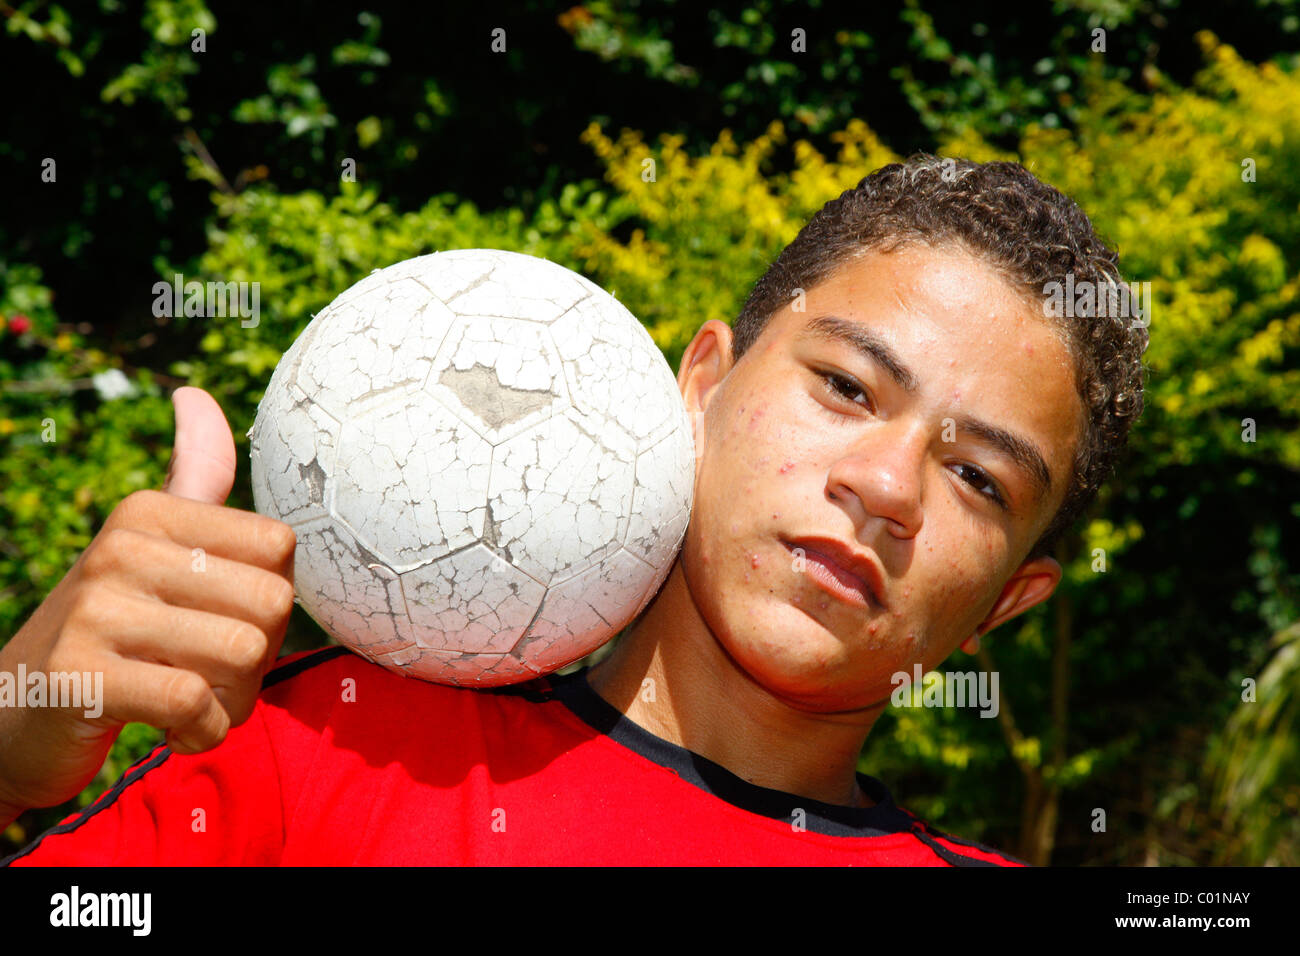 Cool boy with a ball posing lika a macho, Fortaleza, Ceará, Brazil, South America Stock Photo